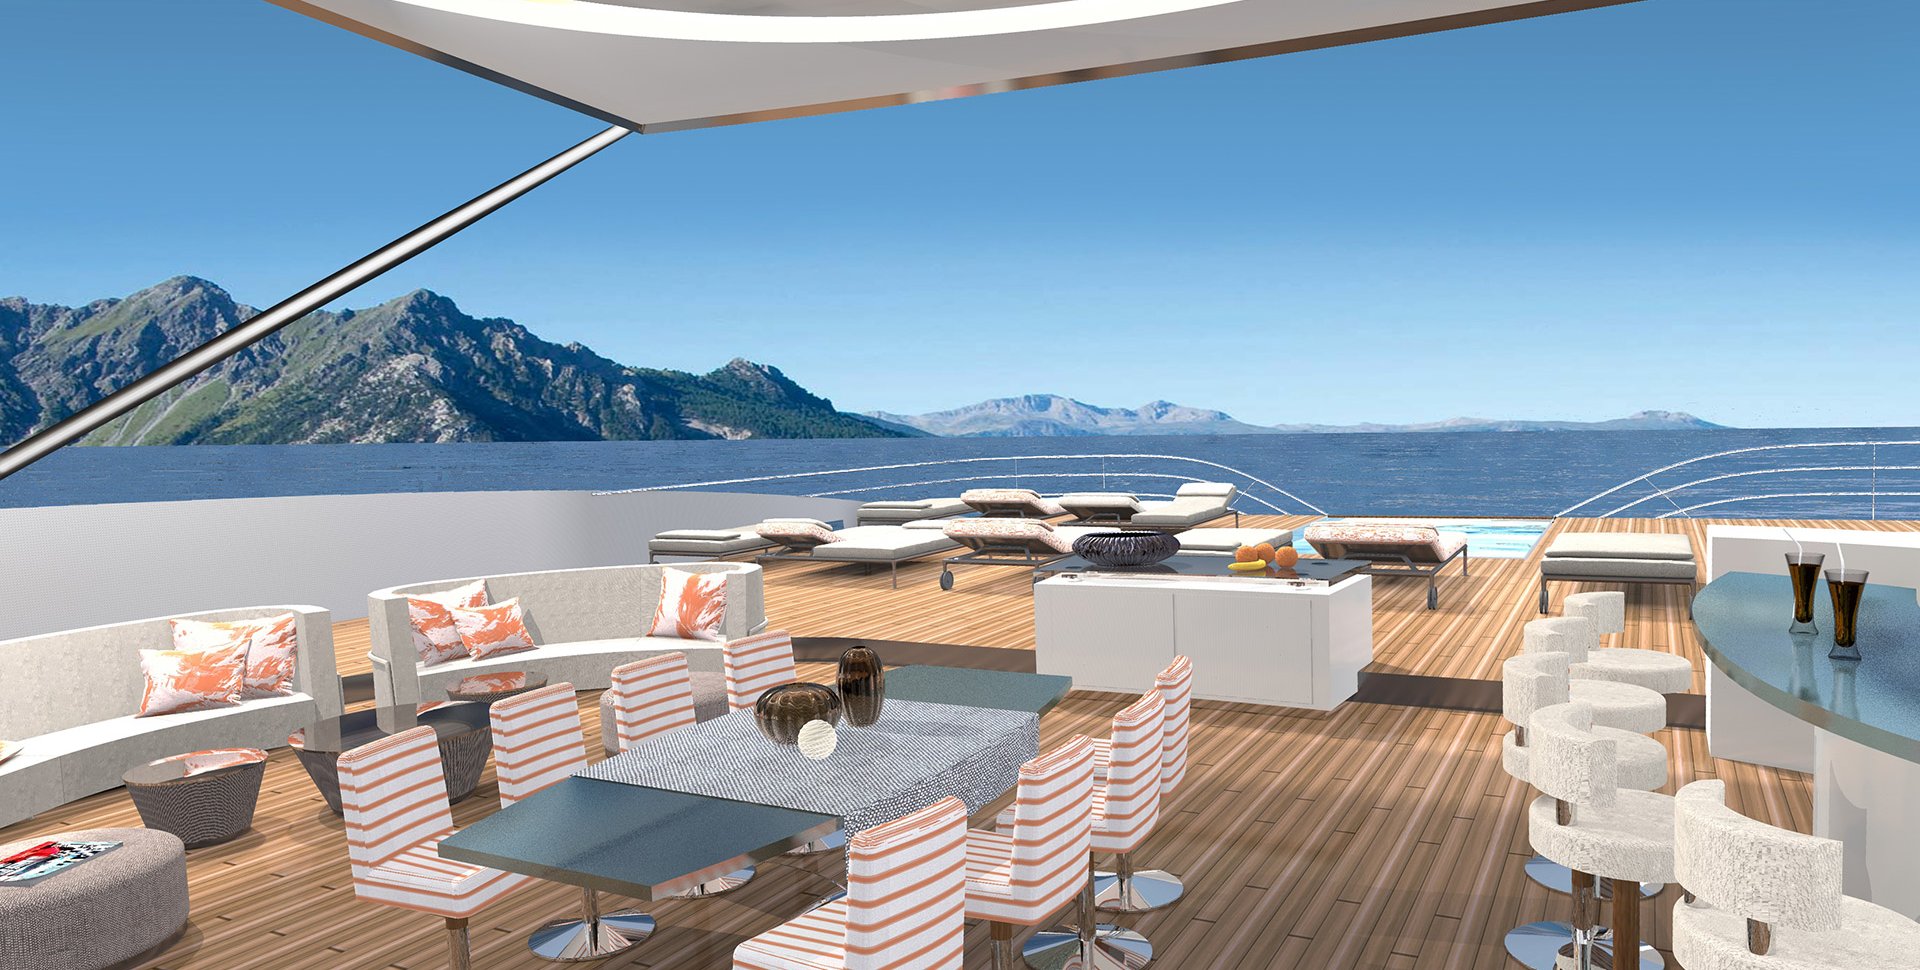 Design du bateau Exos 262 par l'agence Borella Art Design